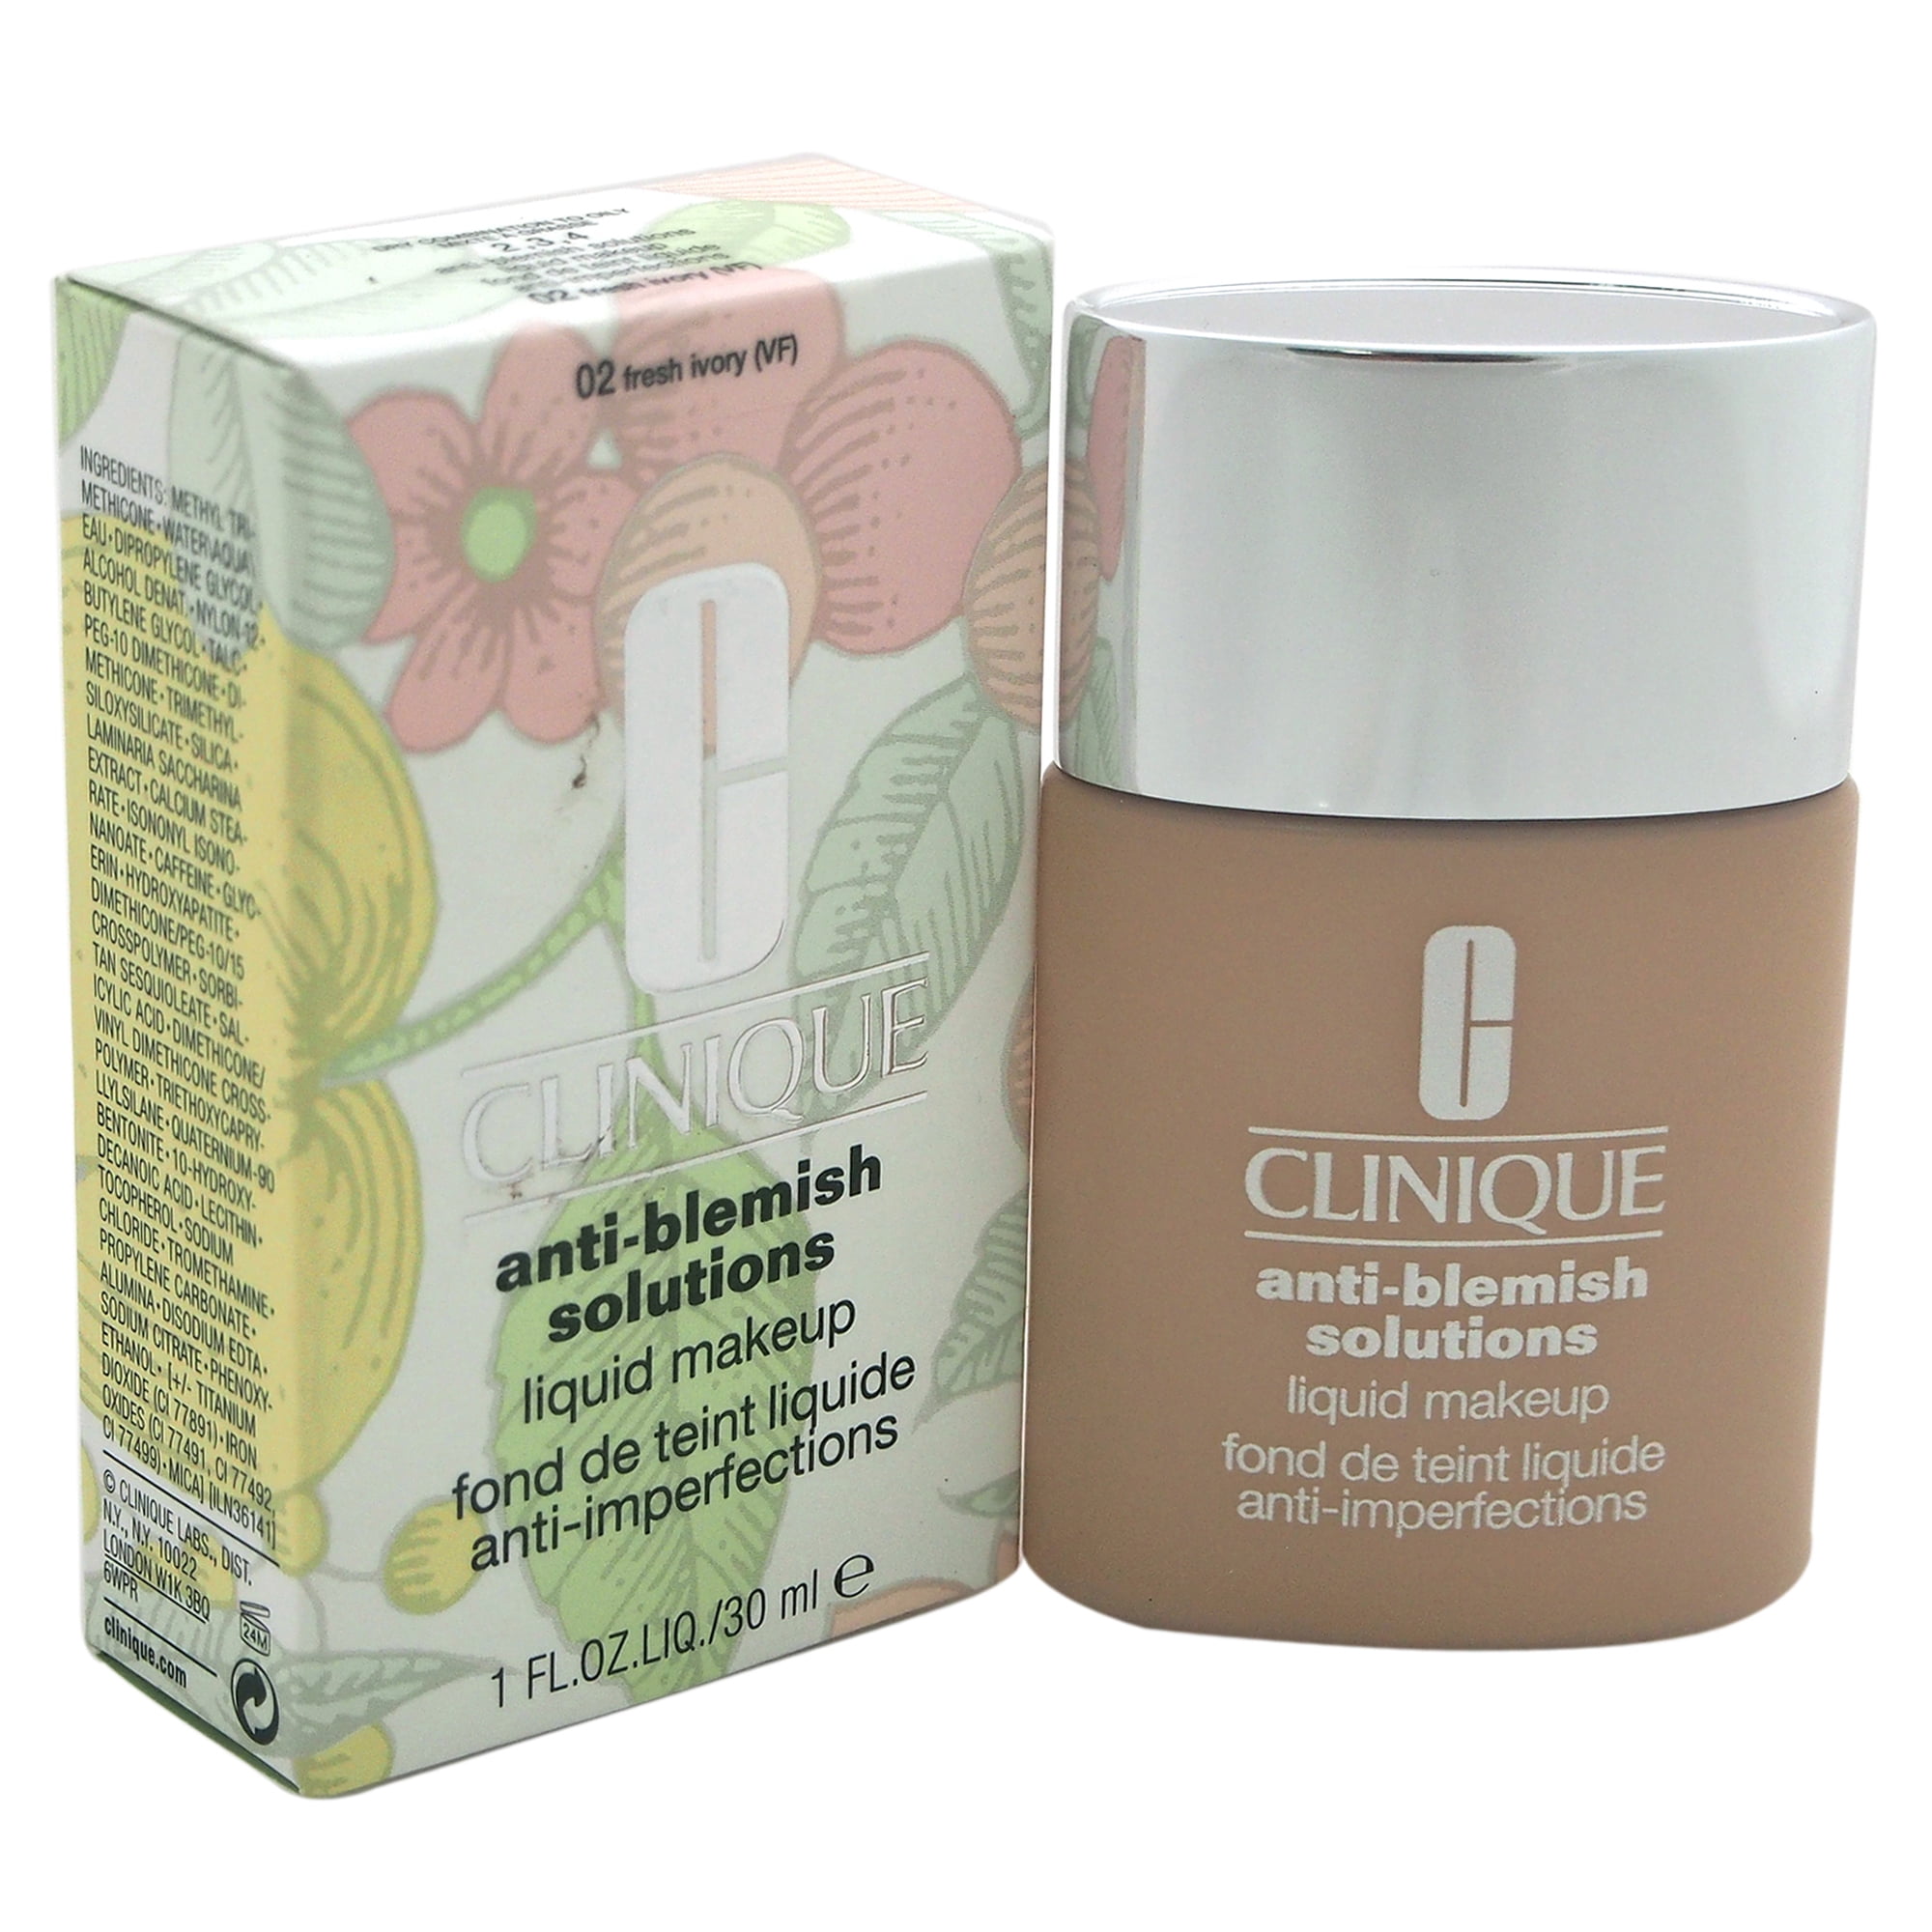 Clinique Anti Blemish Solutions Liquid Makeup - # 02 Fresh Ivory (VF) 1 -